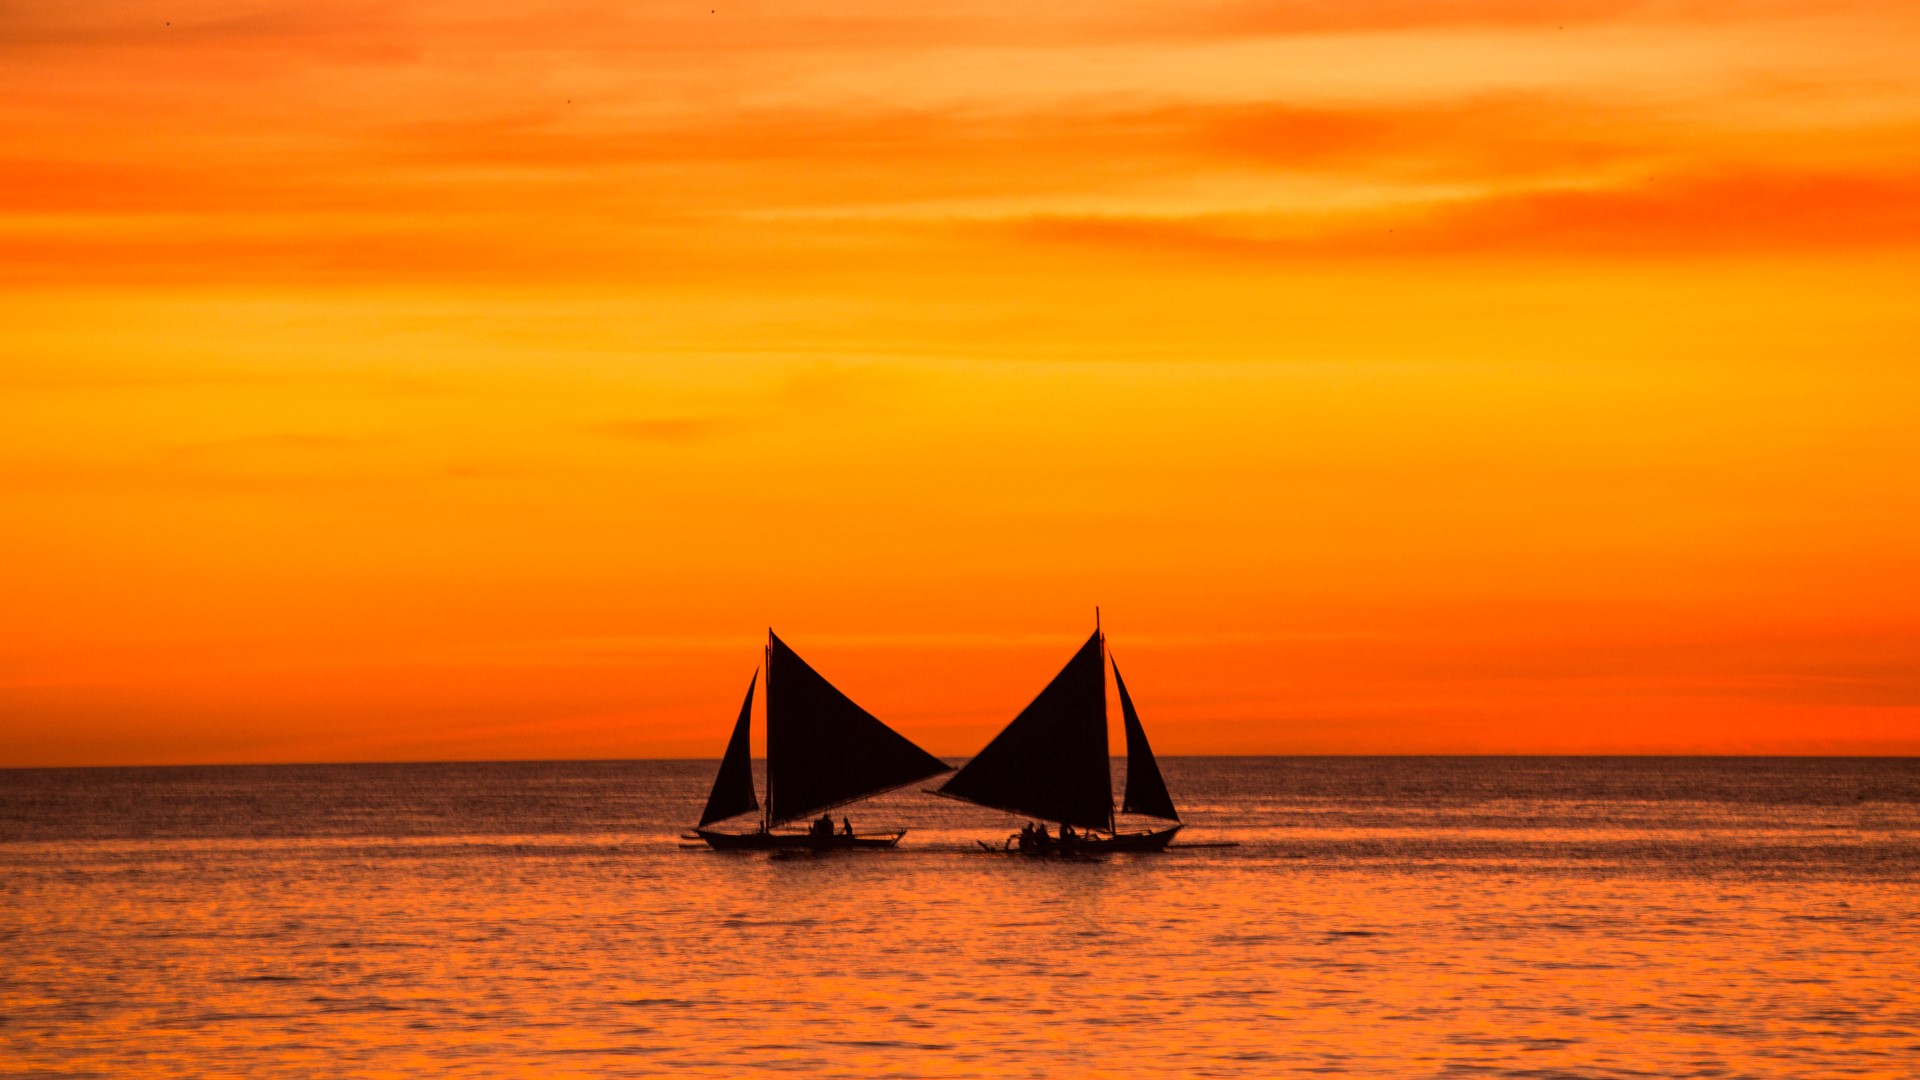 Sailing boats at sunset, Boracay, Philippines | Windows 10 SpotLight ...